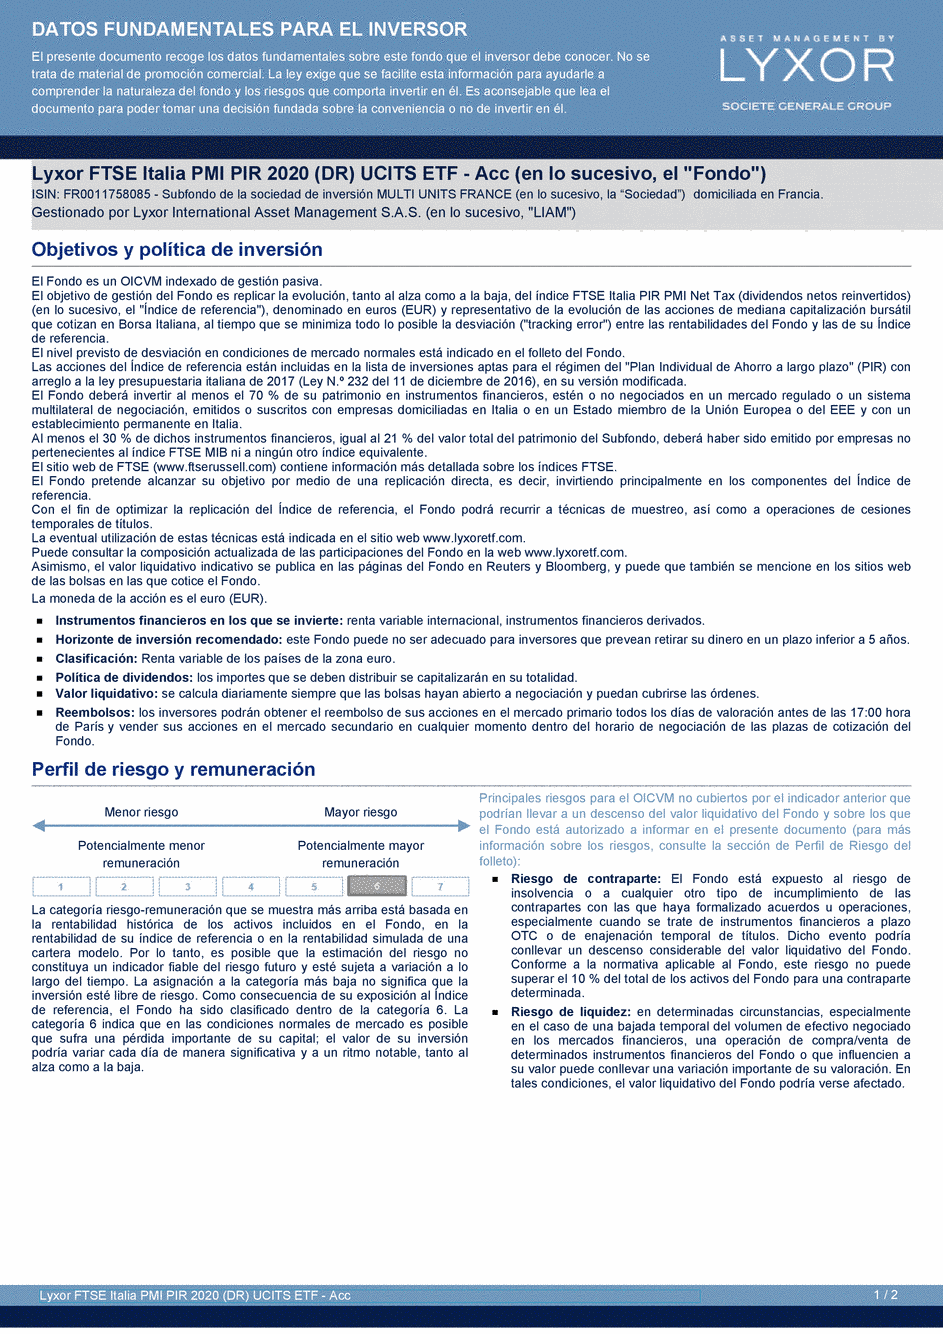 DICI Lyxor FTSE Italia PMI PIR 2020 (DR) UCITS ETF - Acc - 30/03/2020 - Espagnol